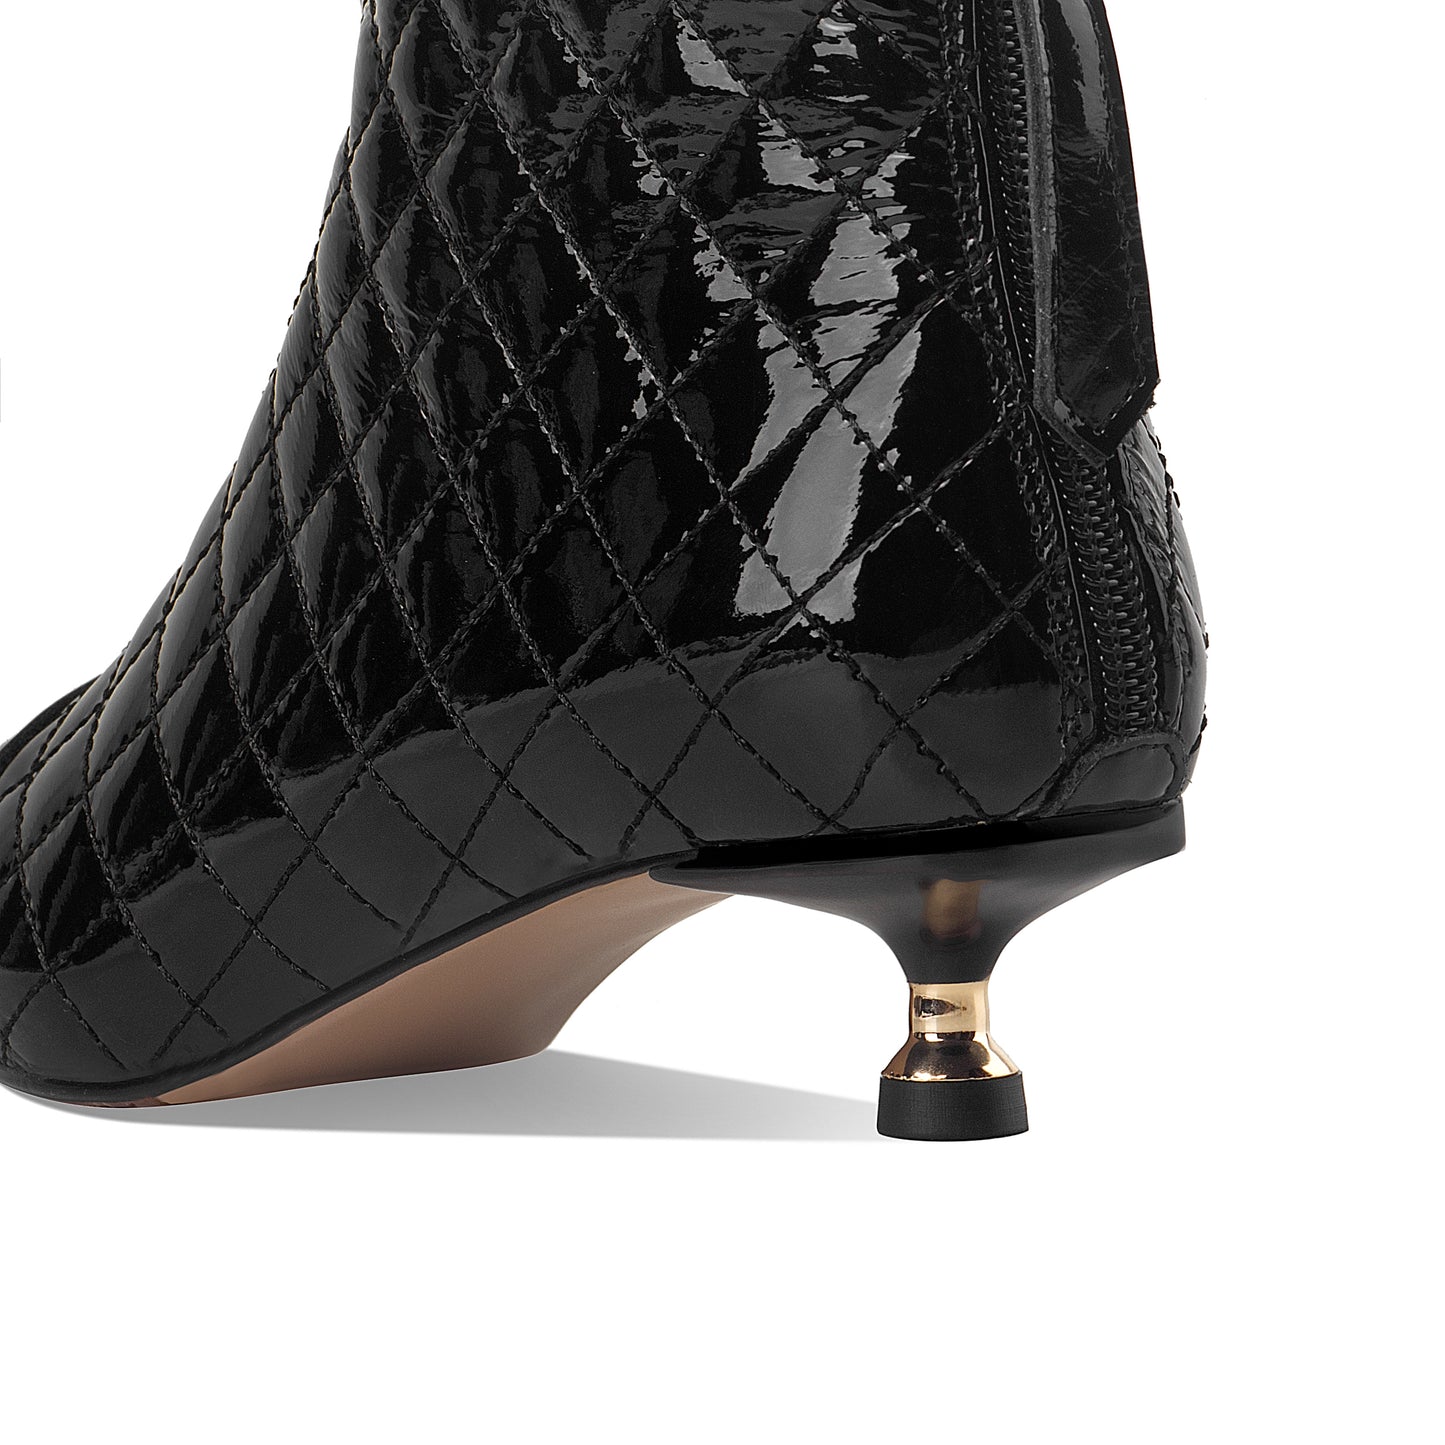 TinaCus Women's Genuine Leather Pointed Toe Handmade Plaid Stylish Kitten Heel Back Zipper Bootie